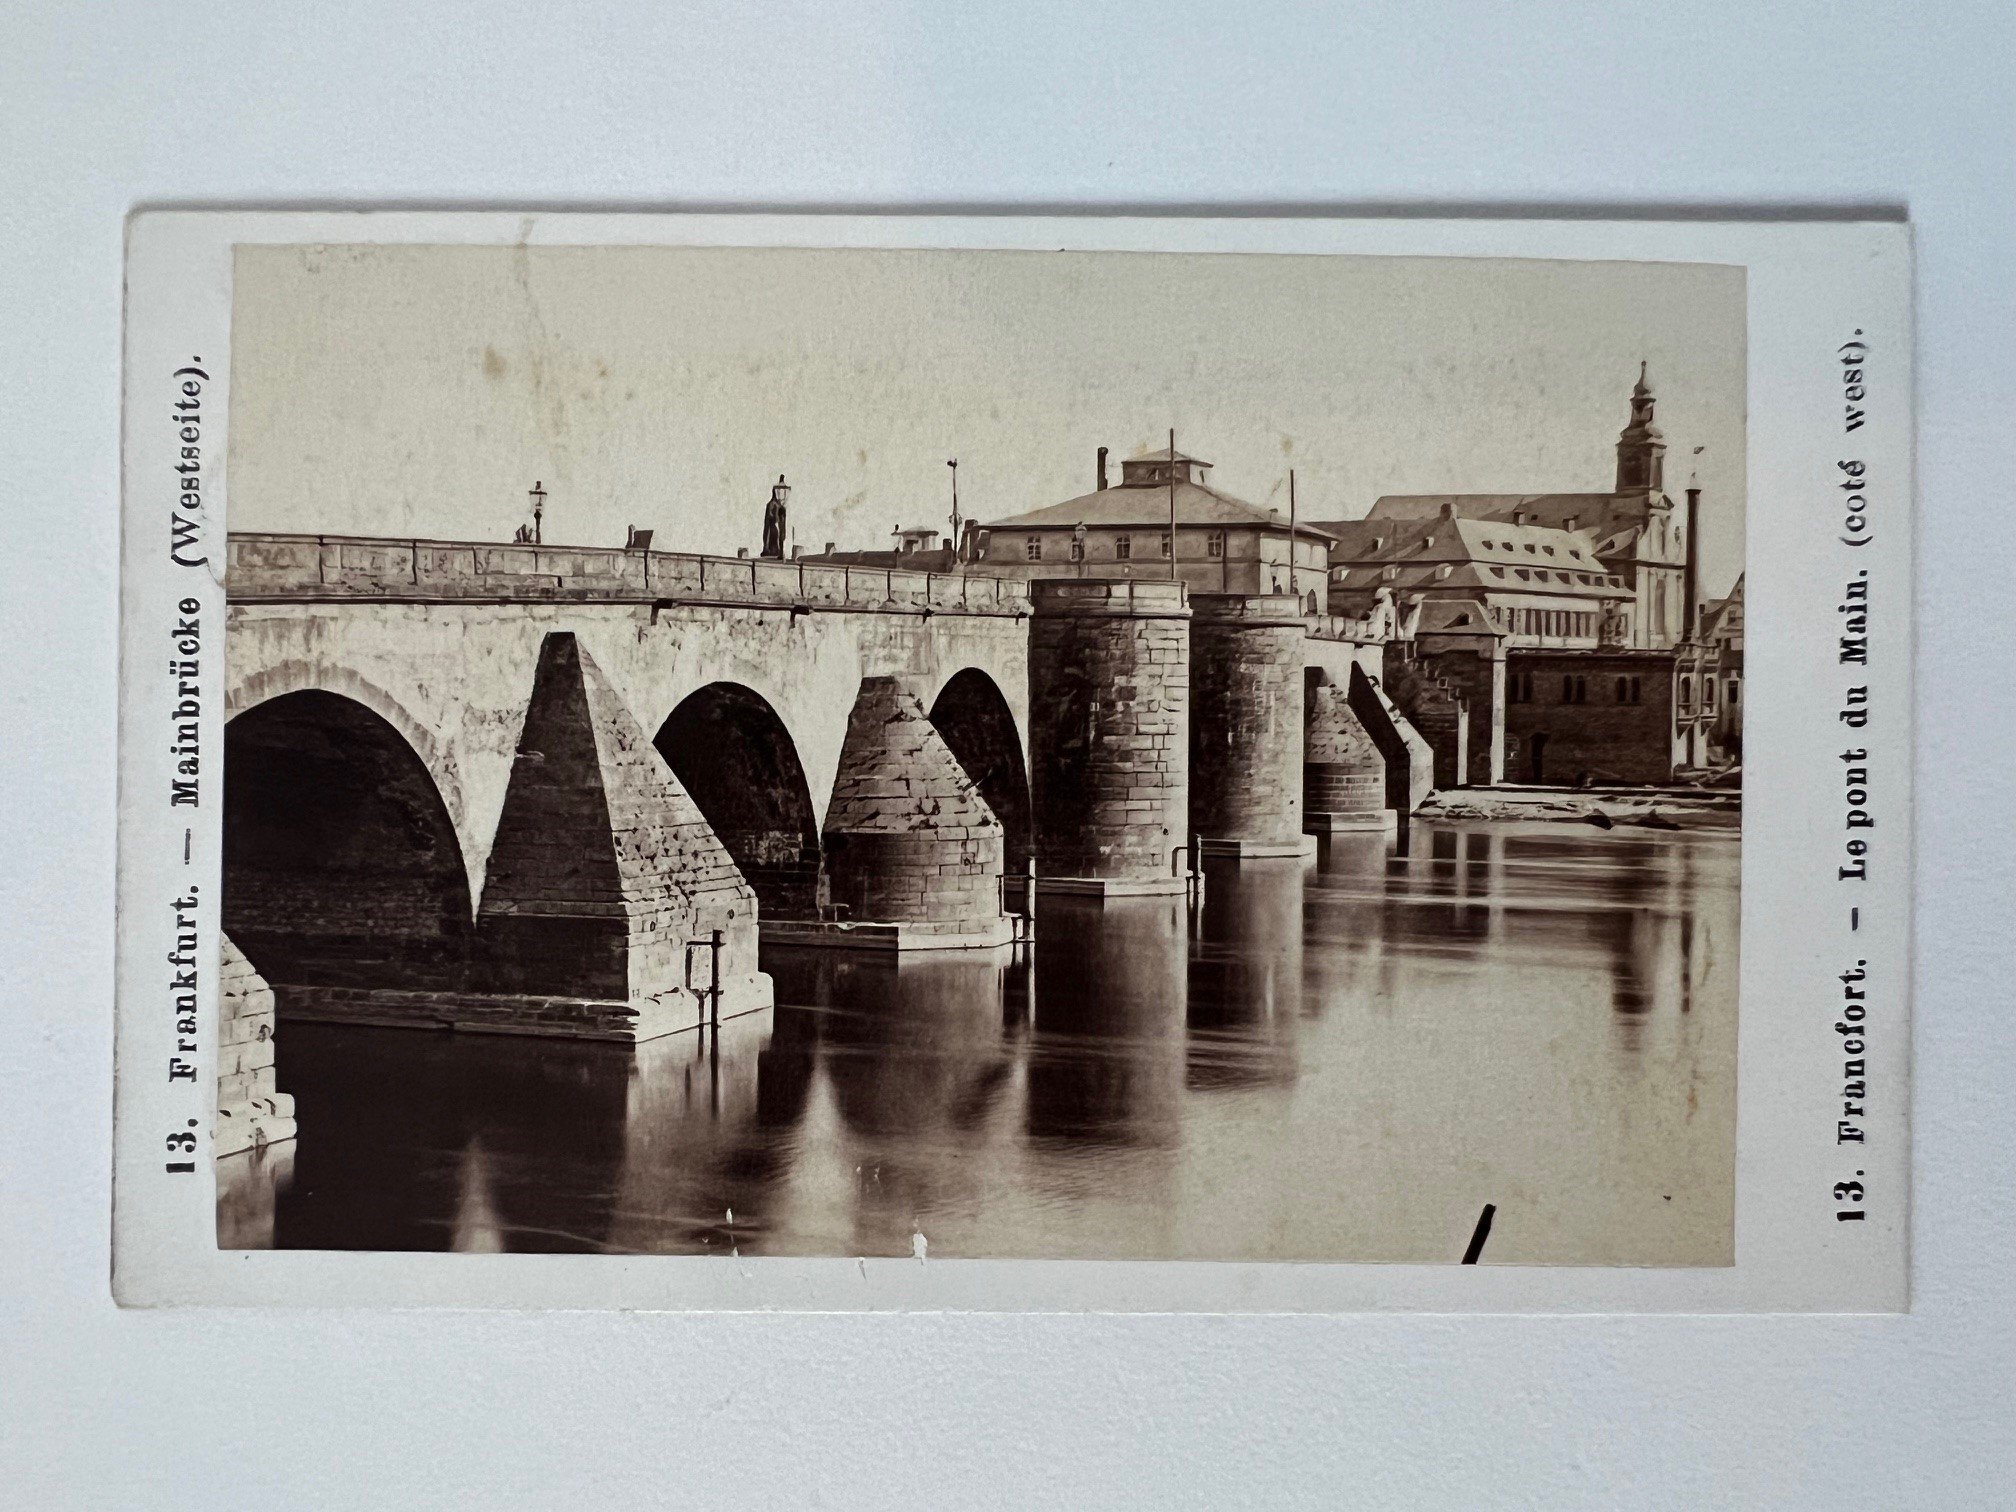 CdV, Frantisek Fridrich, Frankfurt, Nr. 13, Mainbrücke, ca. 1875. (Taunus-Rhein-Main - Regionalgeschichtliche Sammlung Dr. Stefan Naas CC BY-NC-SA)